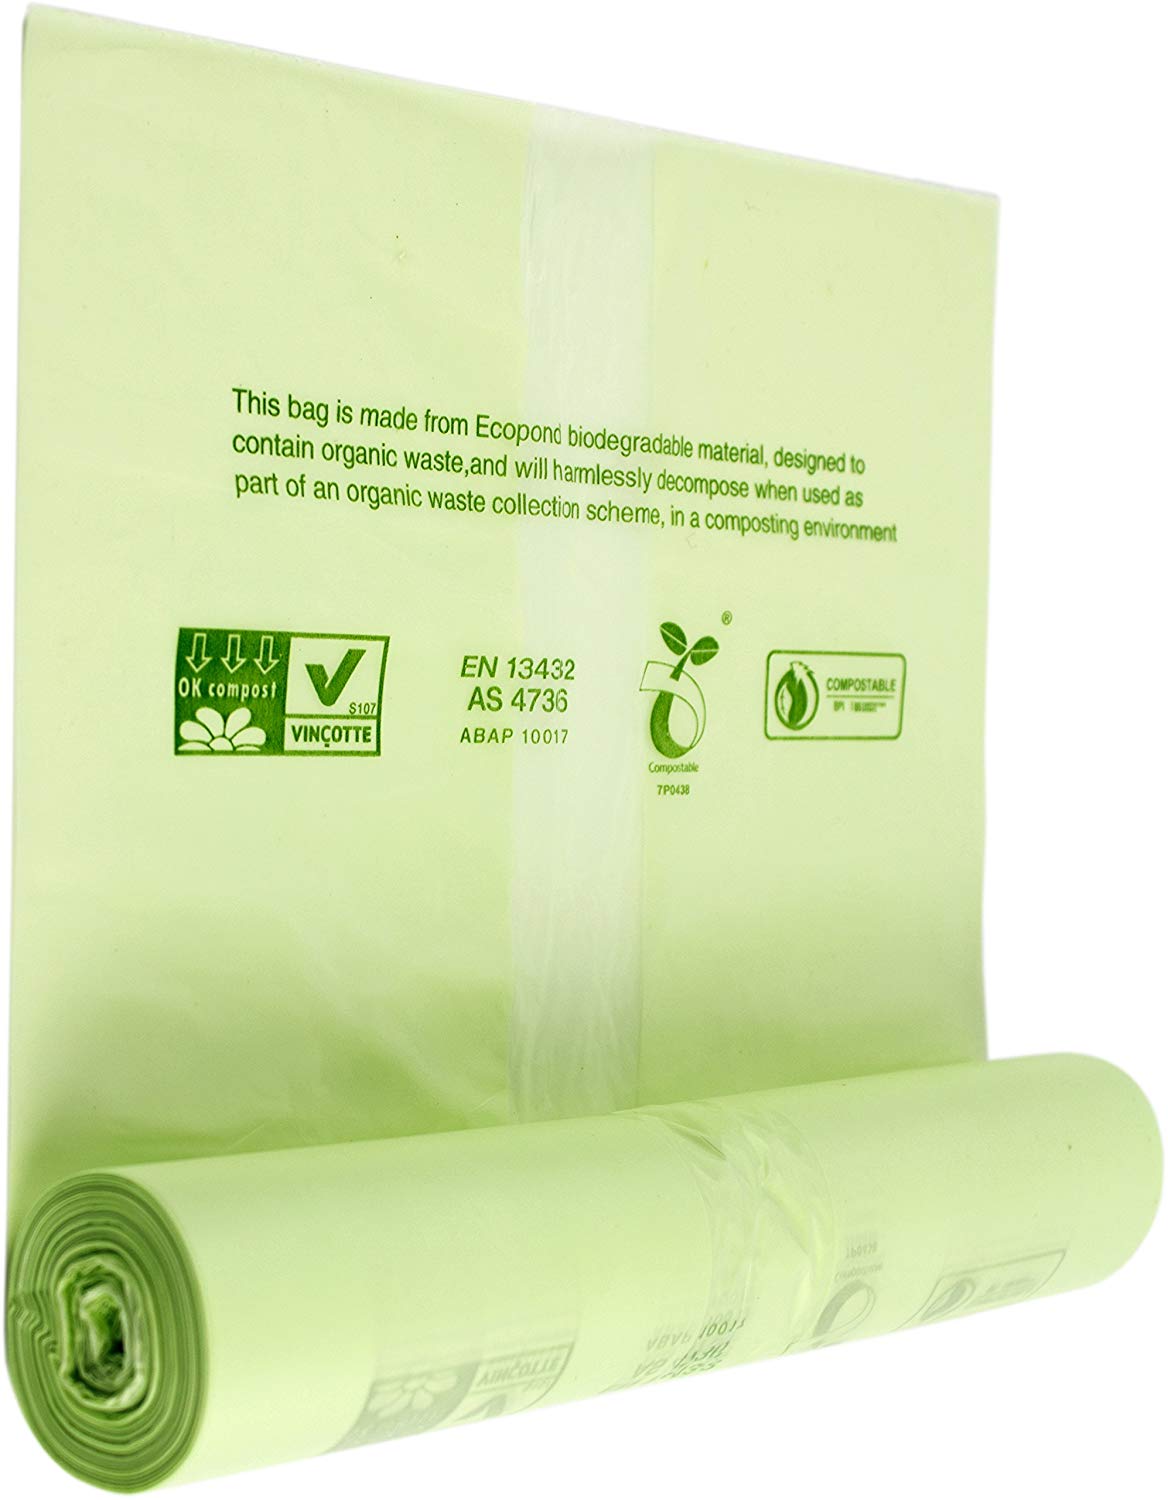 corn starch based 100% biodegradable bag